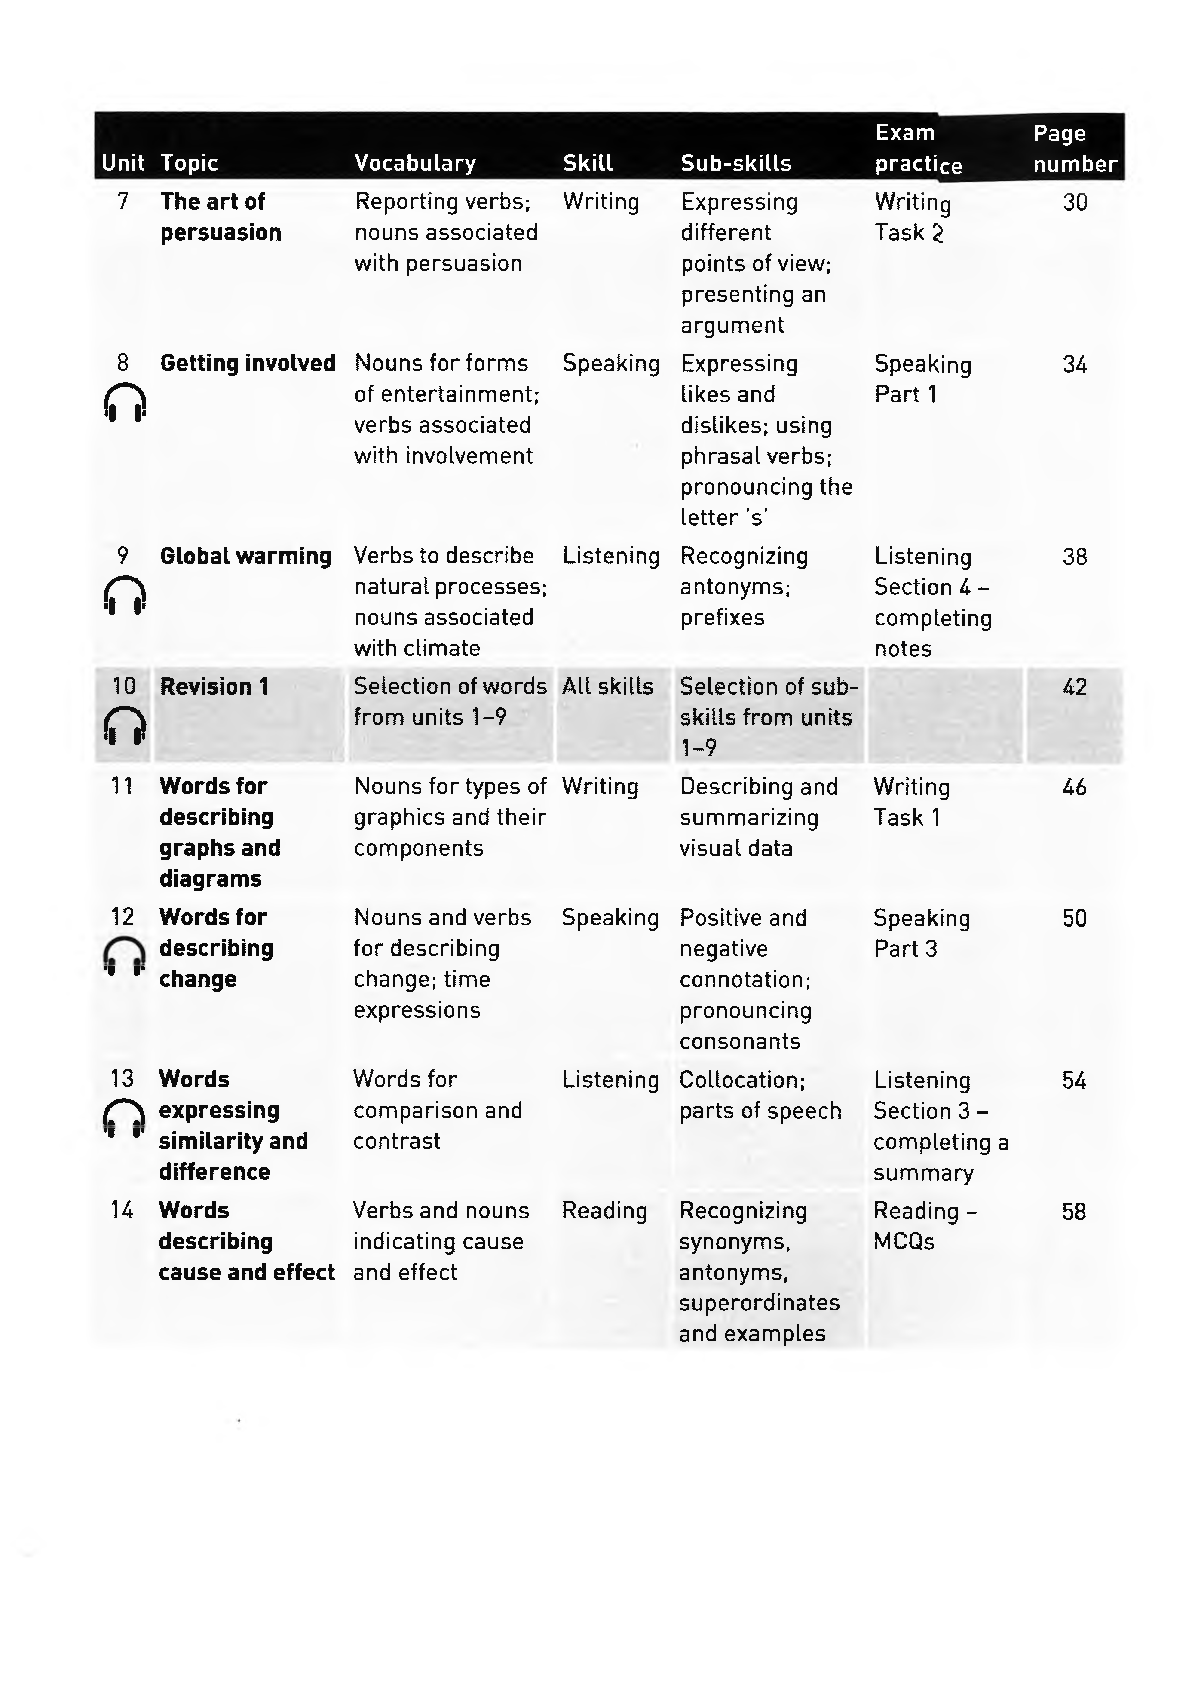 Sách Collins Vocabulary for IELTS pdf | Xem online, tải PDF miễn phí (trang 3)